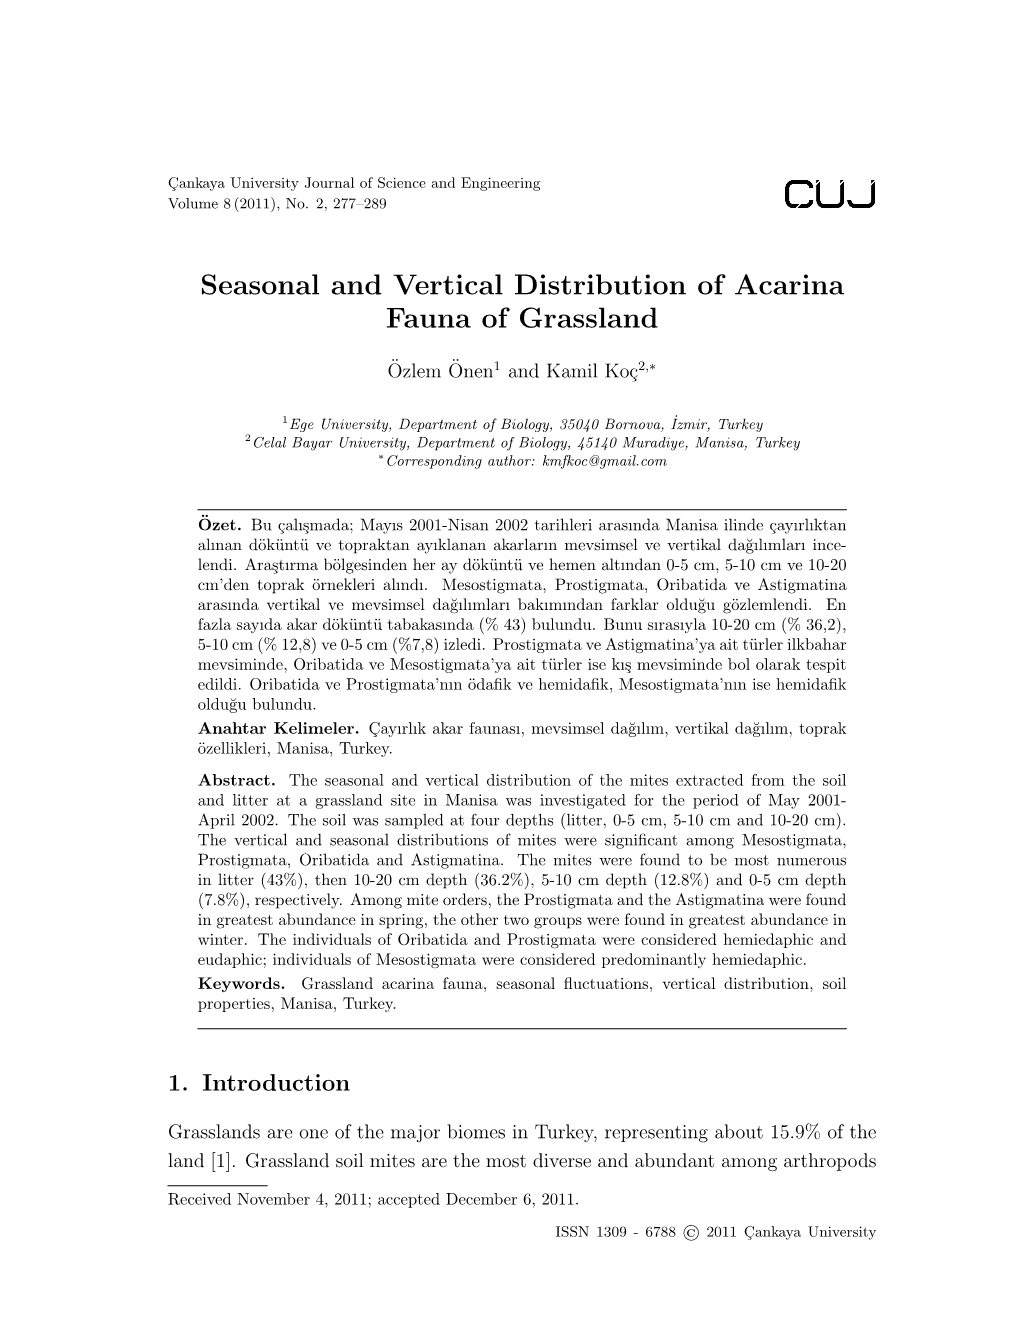 Seasonal and Vertical Distribution of Acarina Fauna of Grassland